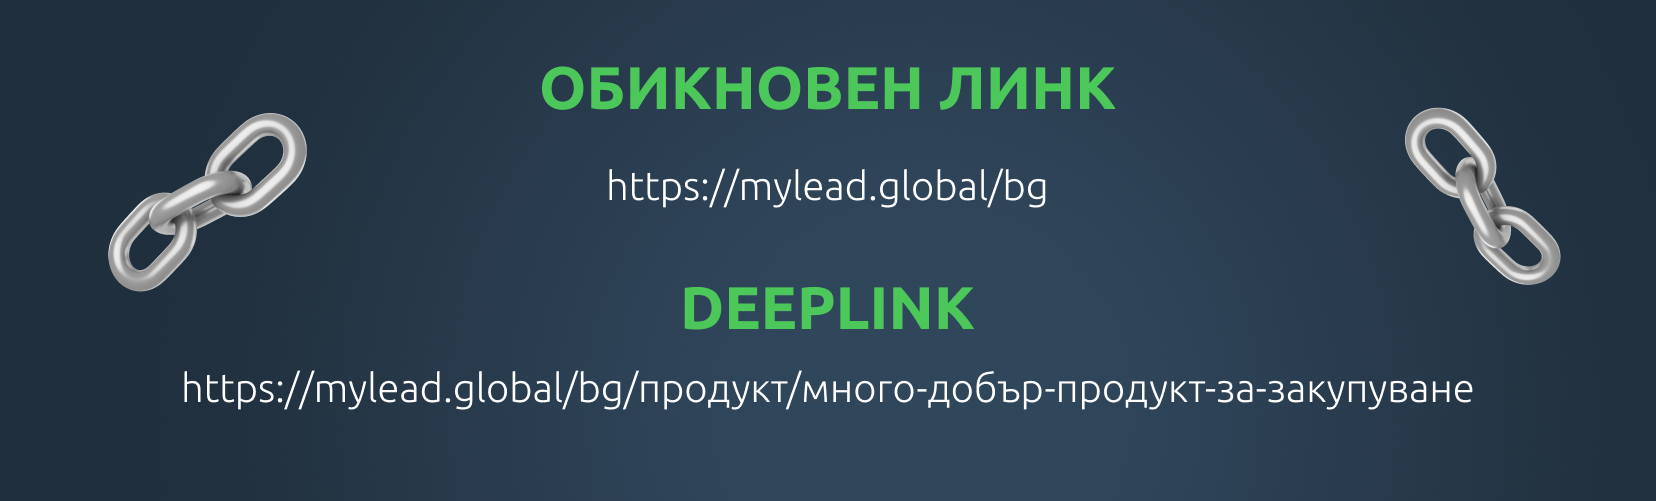 deep link example